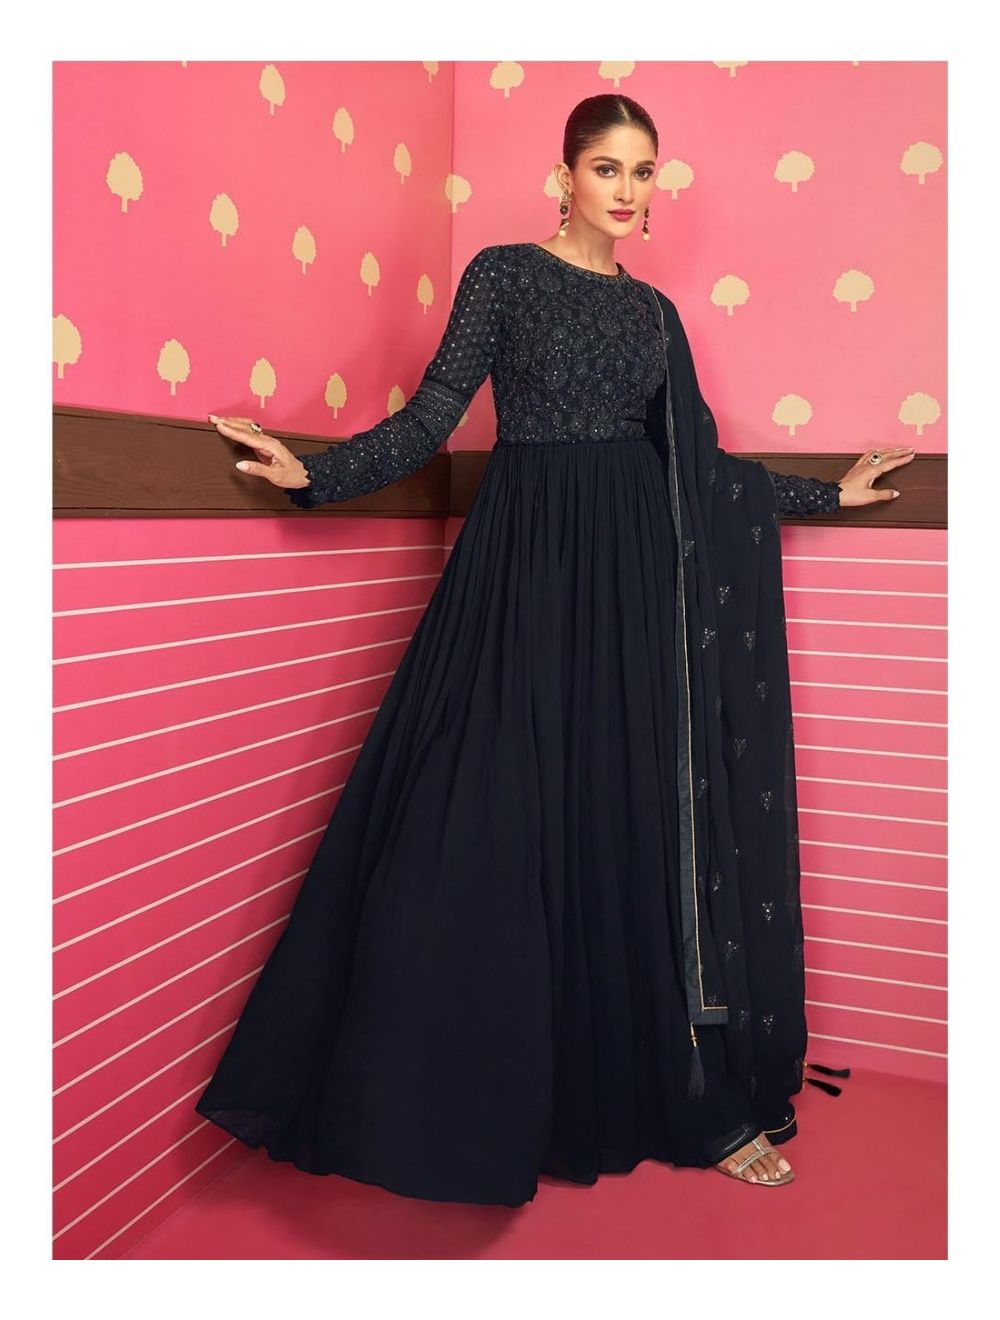 Diy NAIRA Shivangi Joshi Inspired EVENING Gown only in 10 Minutes  Diy  PROM Dress  YouTube